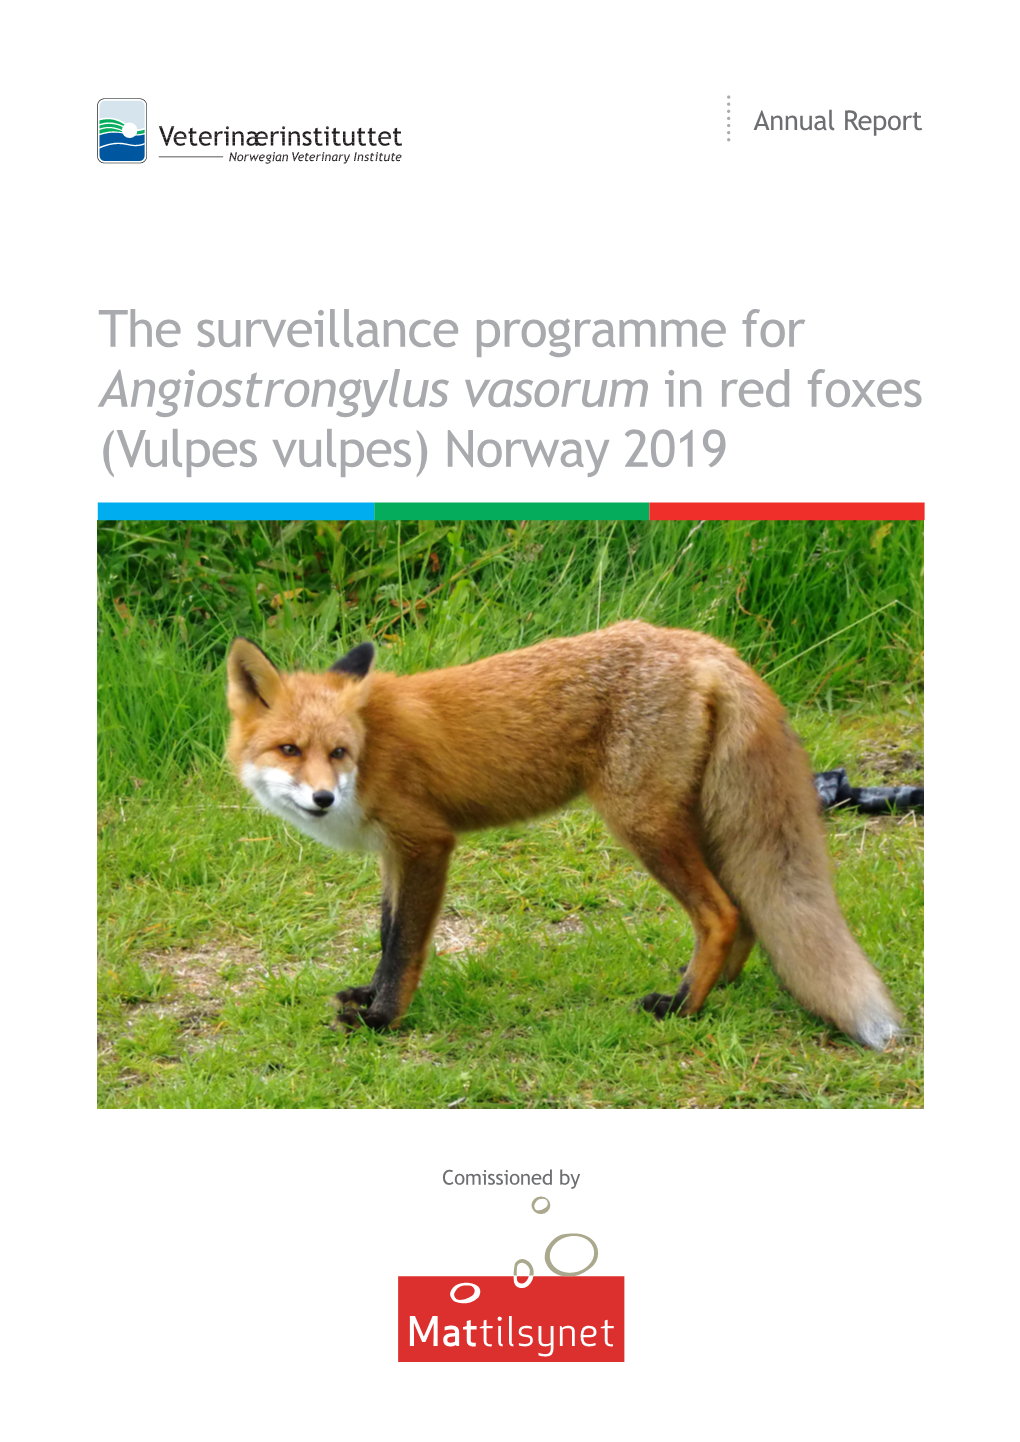 Angiostrongylus Vasorum in Red Foxes 2019